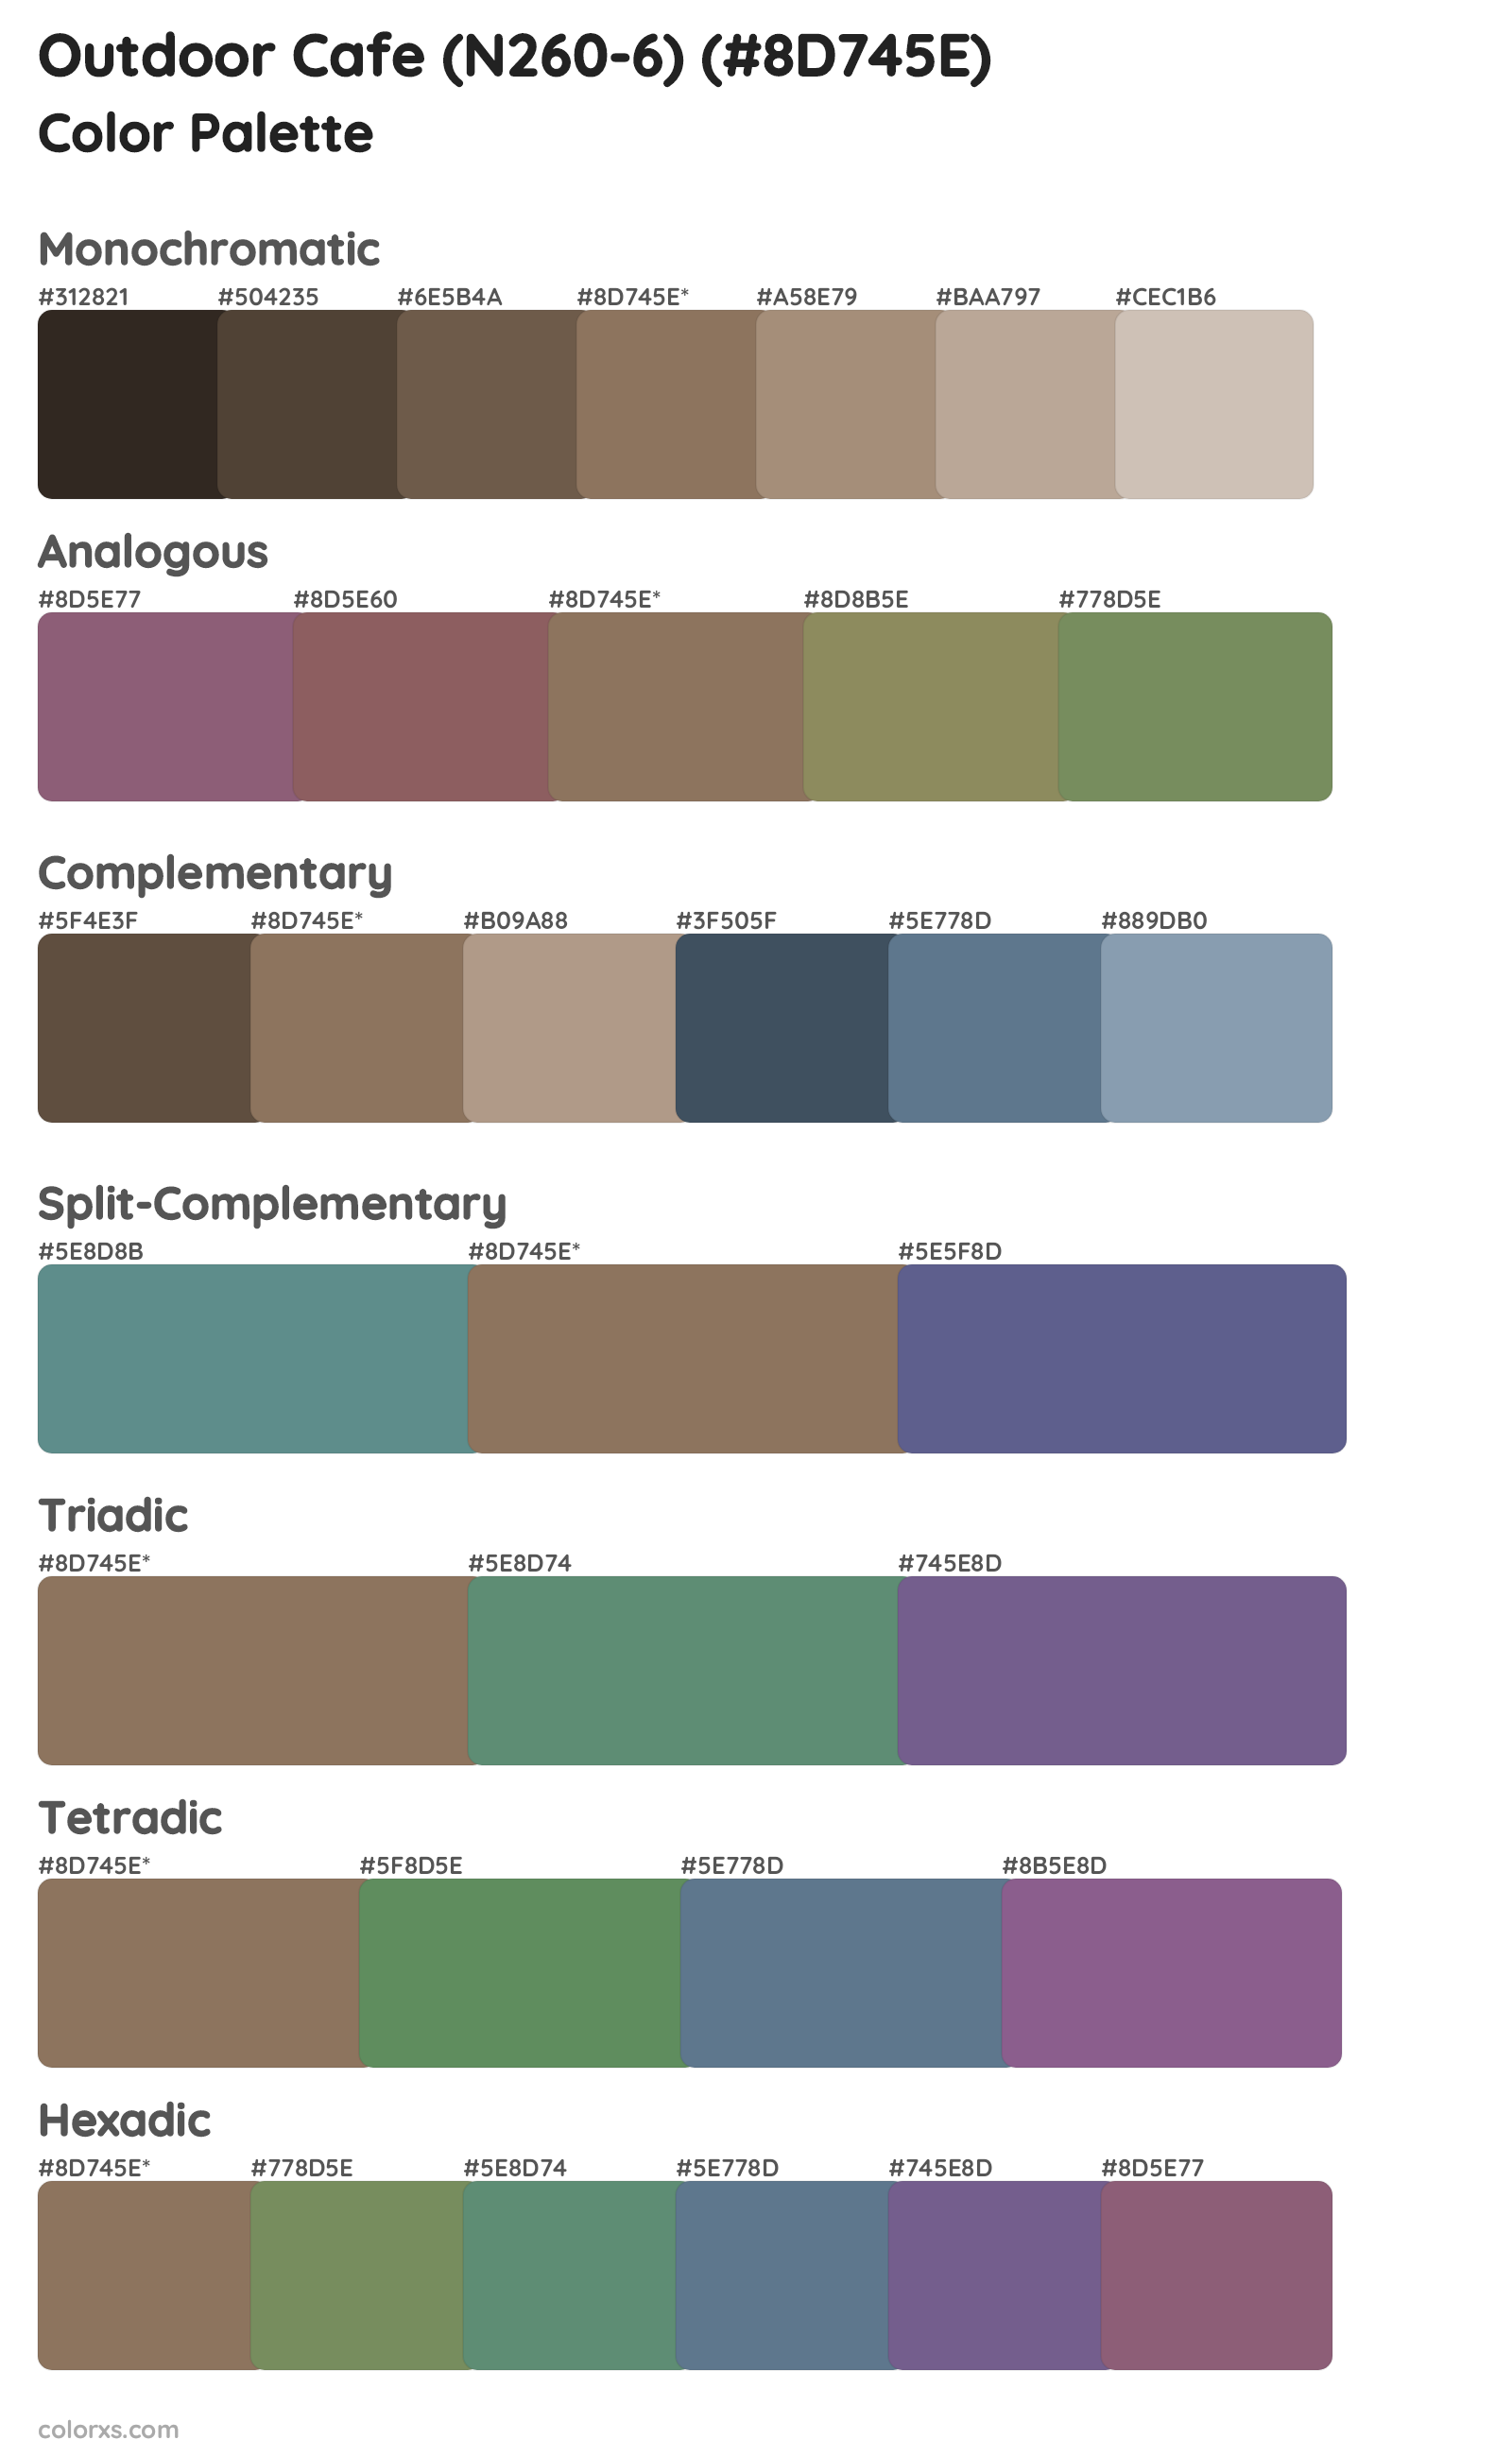 Outdoor Cafe (N260-6) Color Scheme Palettes